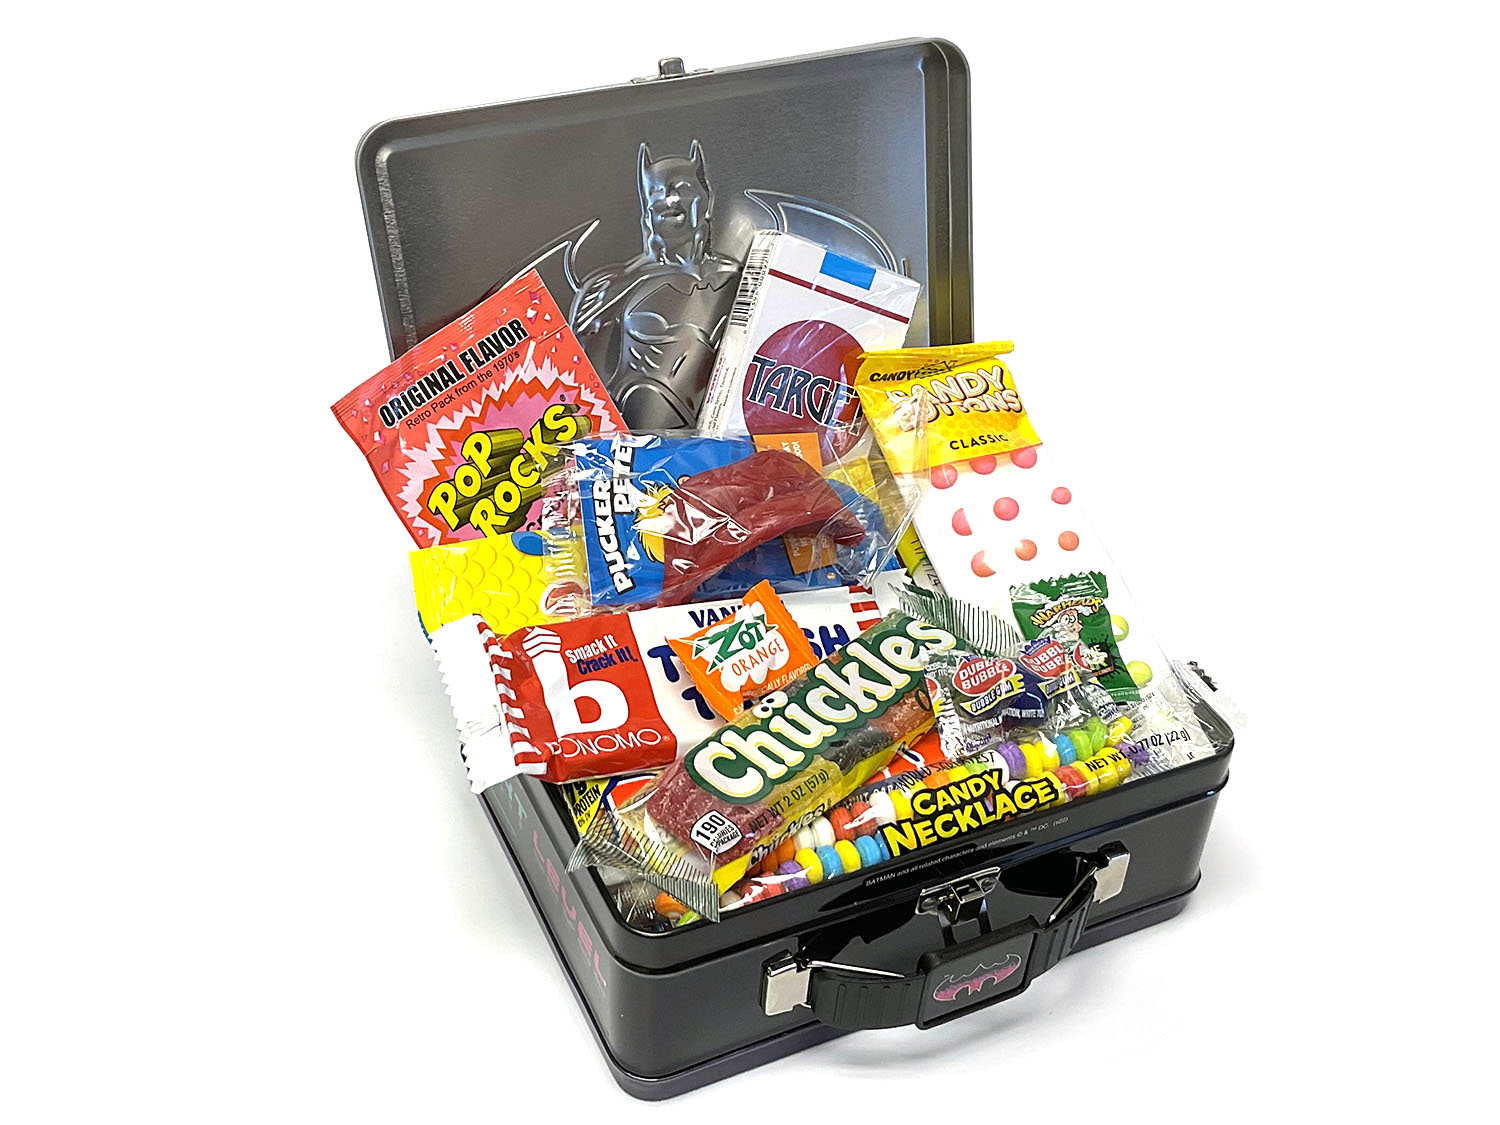 Lunch Box - Batman Next Level - Premium Candy Assortment